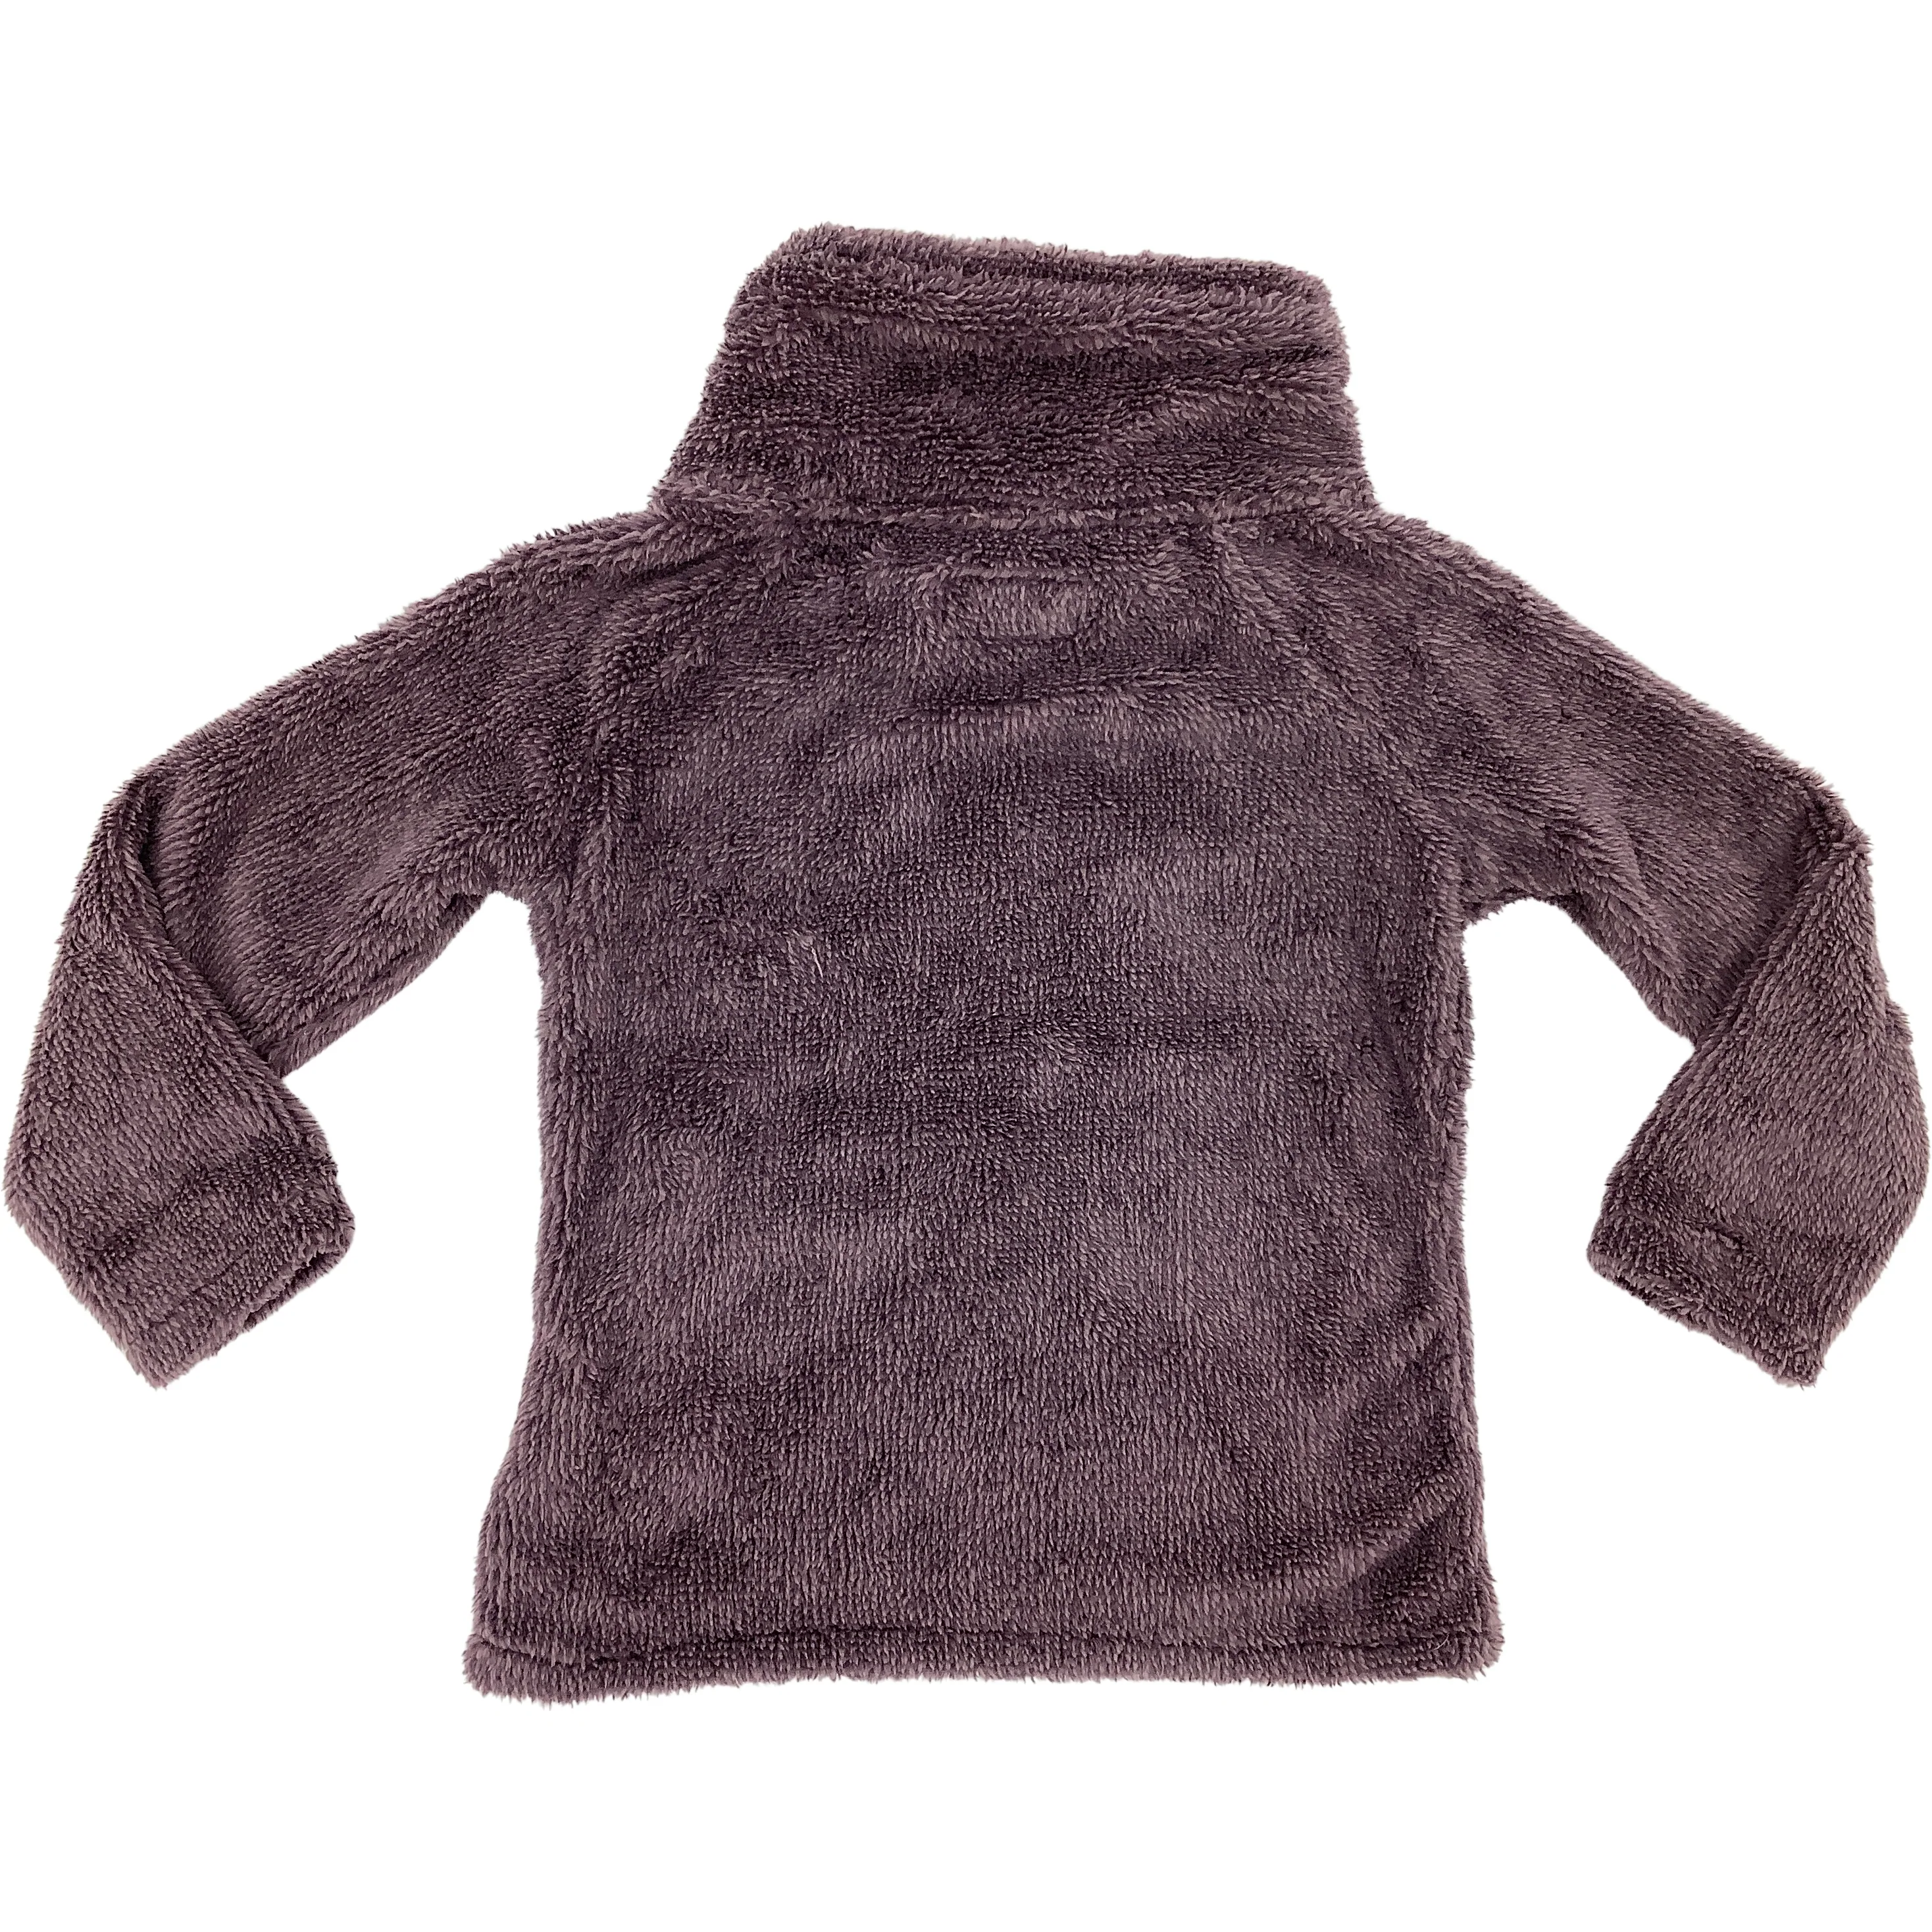 O'Neill Girl's Sweatshirt / Purple / Kid's Fuzzy Sweater / Size S